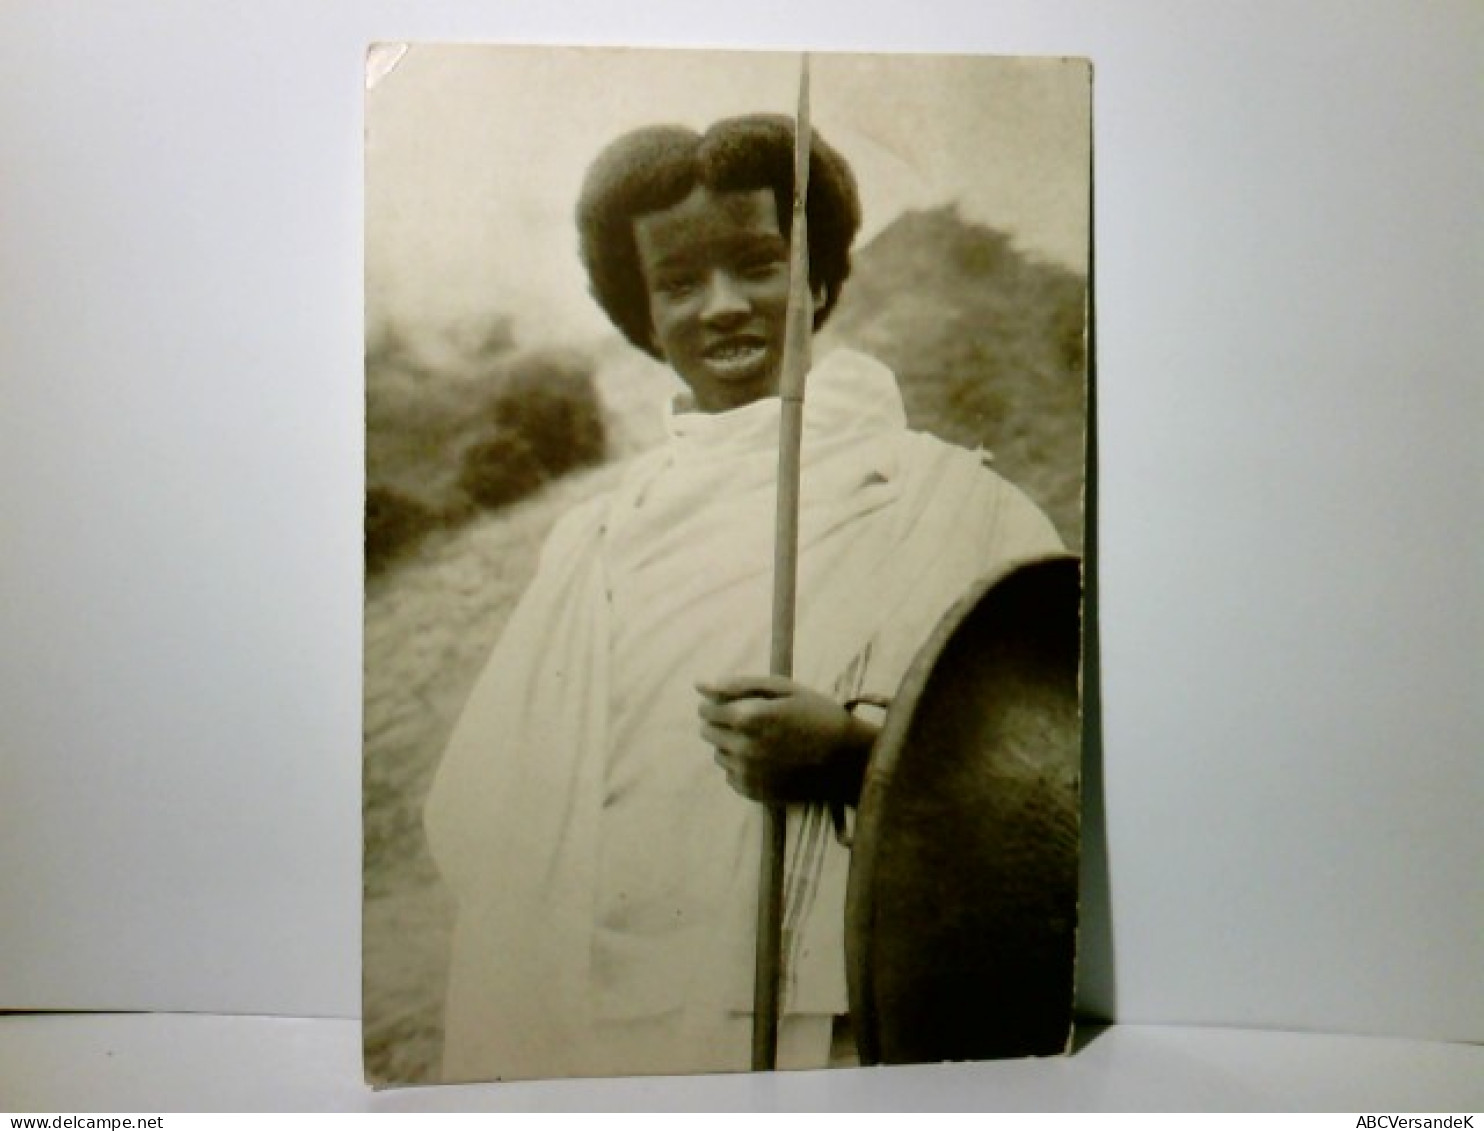 Somali - Dorf Aus Abessinien. L. Ruhe - John Hagenbeck. Alte Ansichtskarte / Postkarte S/w, Ungel., Alter O.A. - Non Classificati